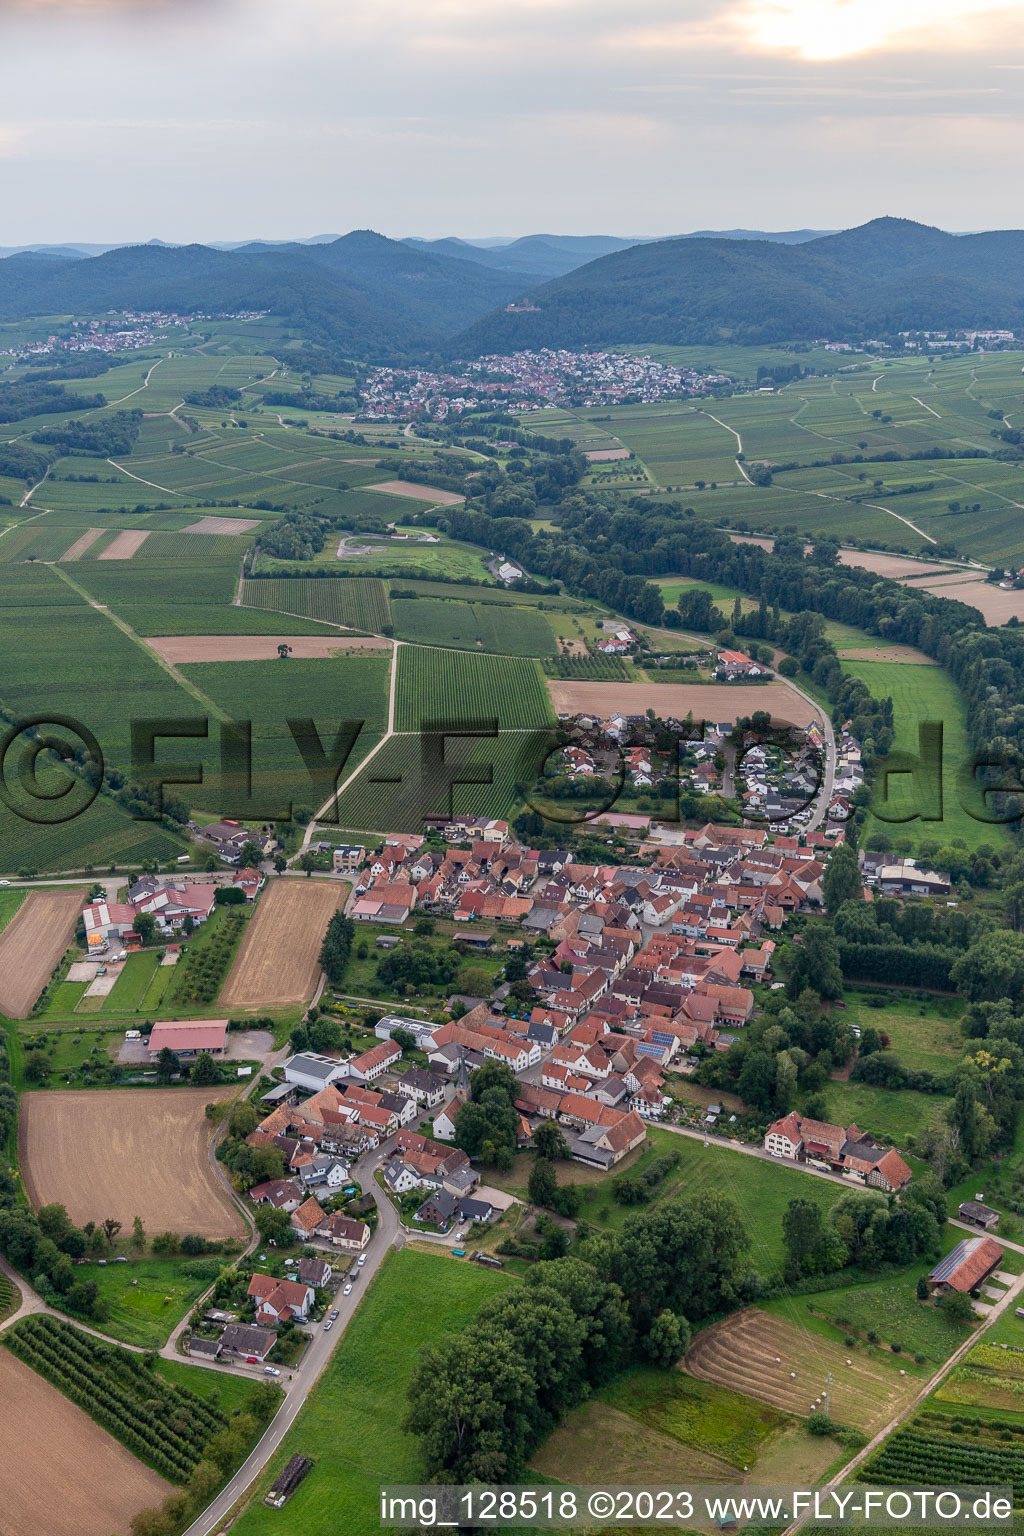 District Klingen in Heuchelheim-Klingen in the state Rhineland-Palatinate, Germany from the drone perspective